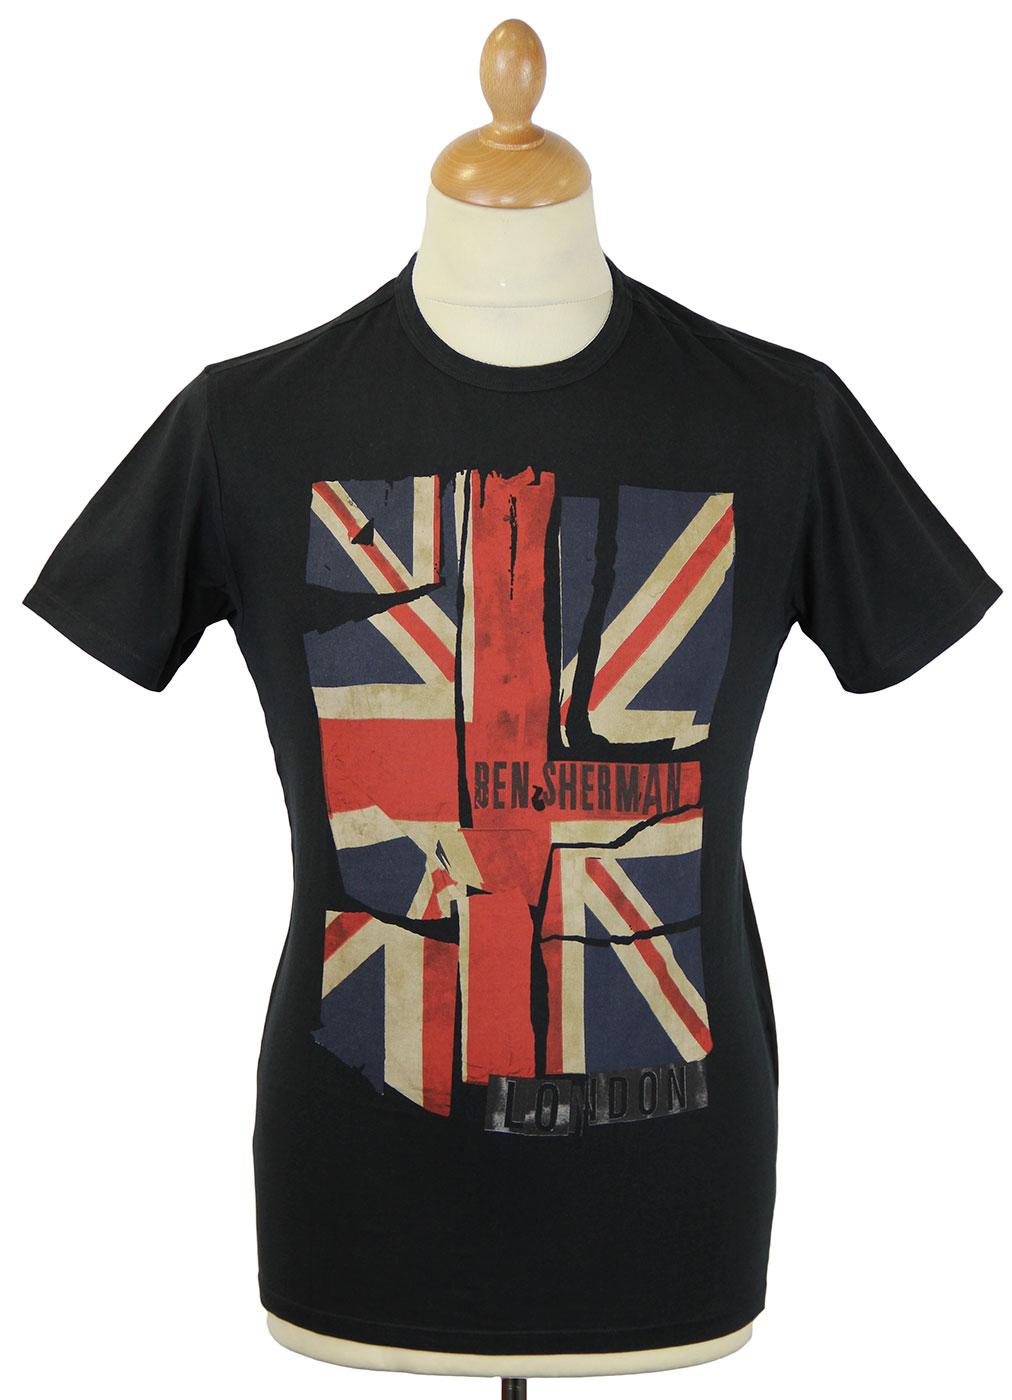 BEN SHERMAN Union Jack Retro Indie Mod Pop Art T-Shirt in Black